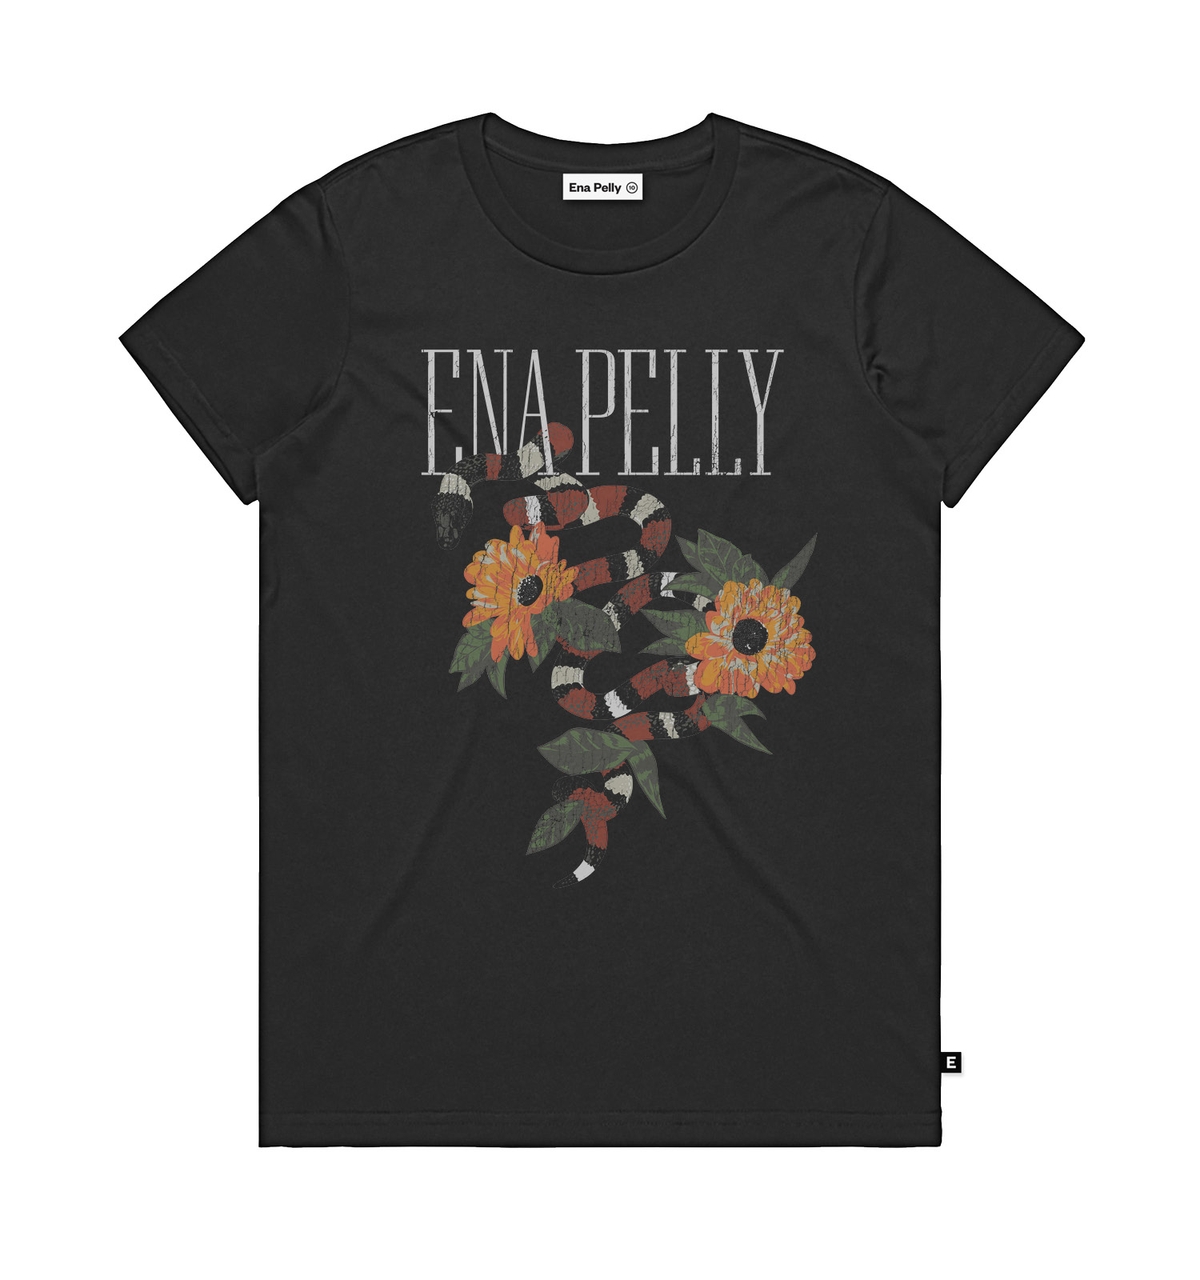 Ena Pelly - Snake T-Shirt Graphic | Atollon - a design company